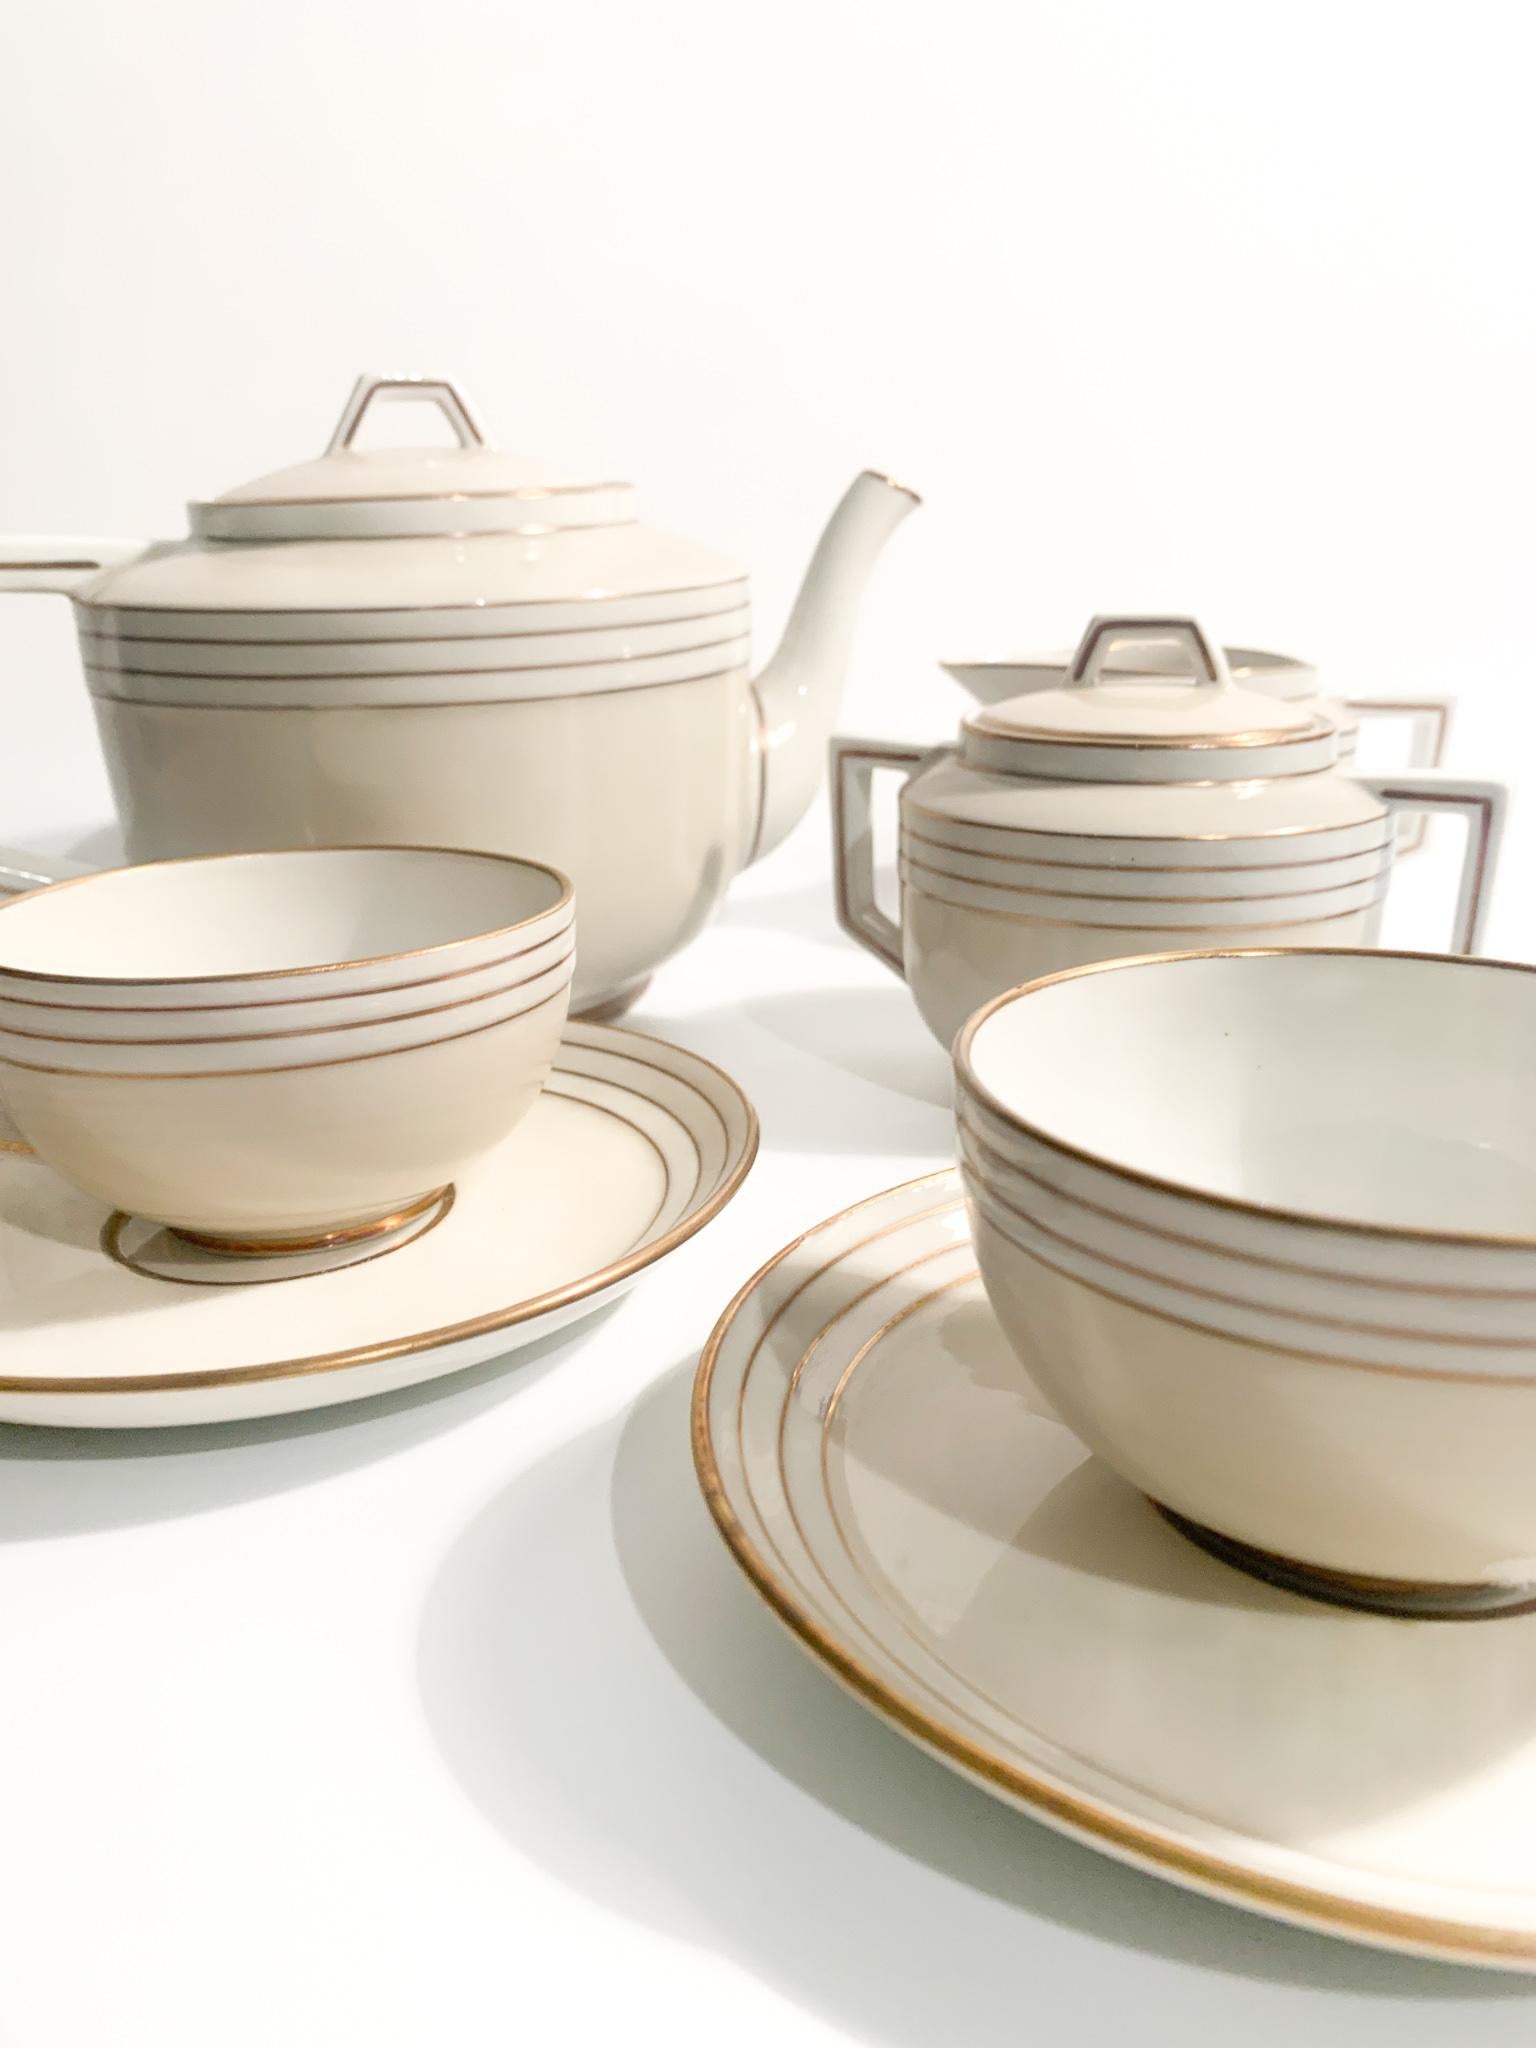 Art Deco Twelve Richard Ginori Decò Tea Set in Porcelain from the 1940s For Sale